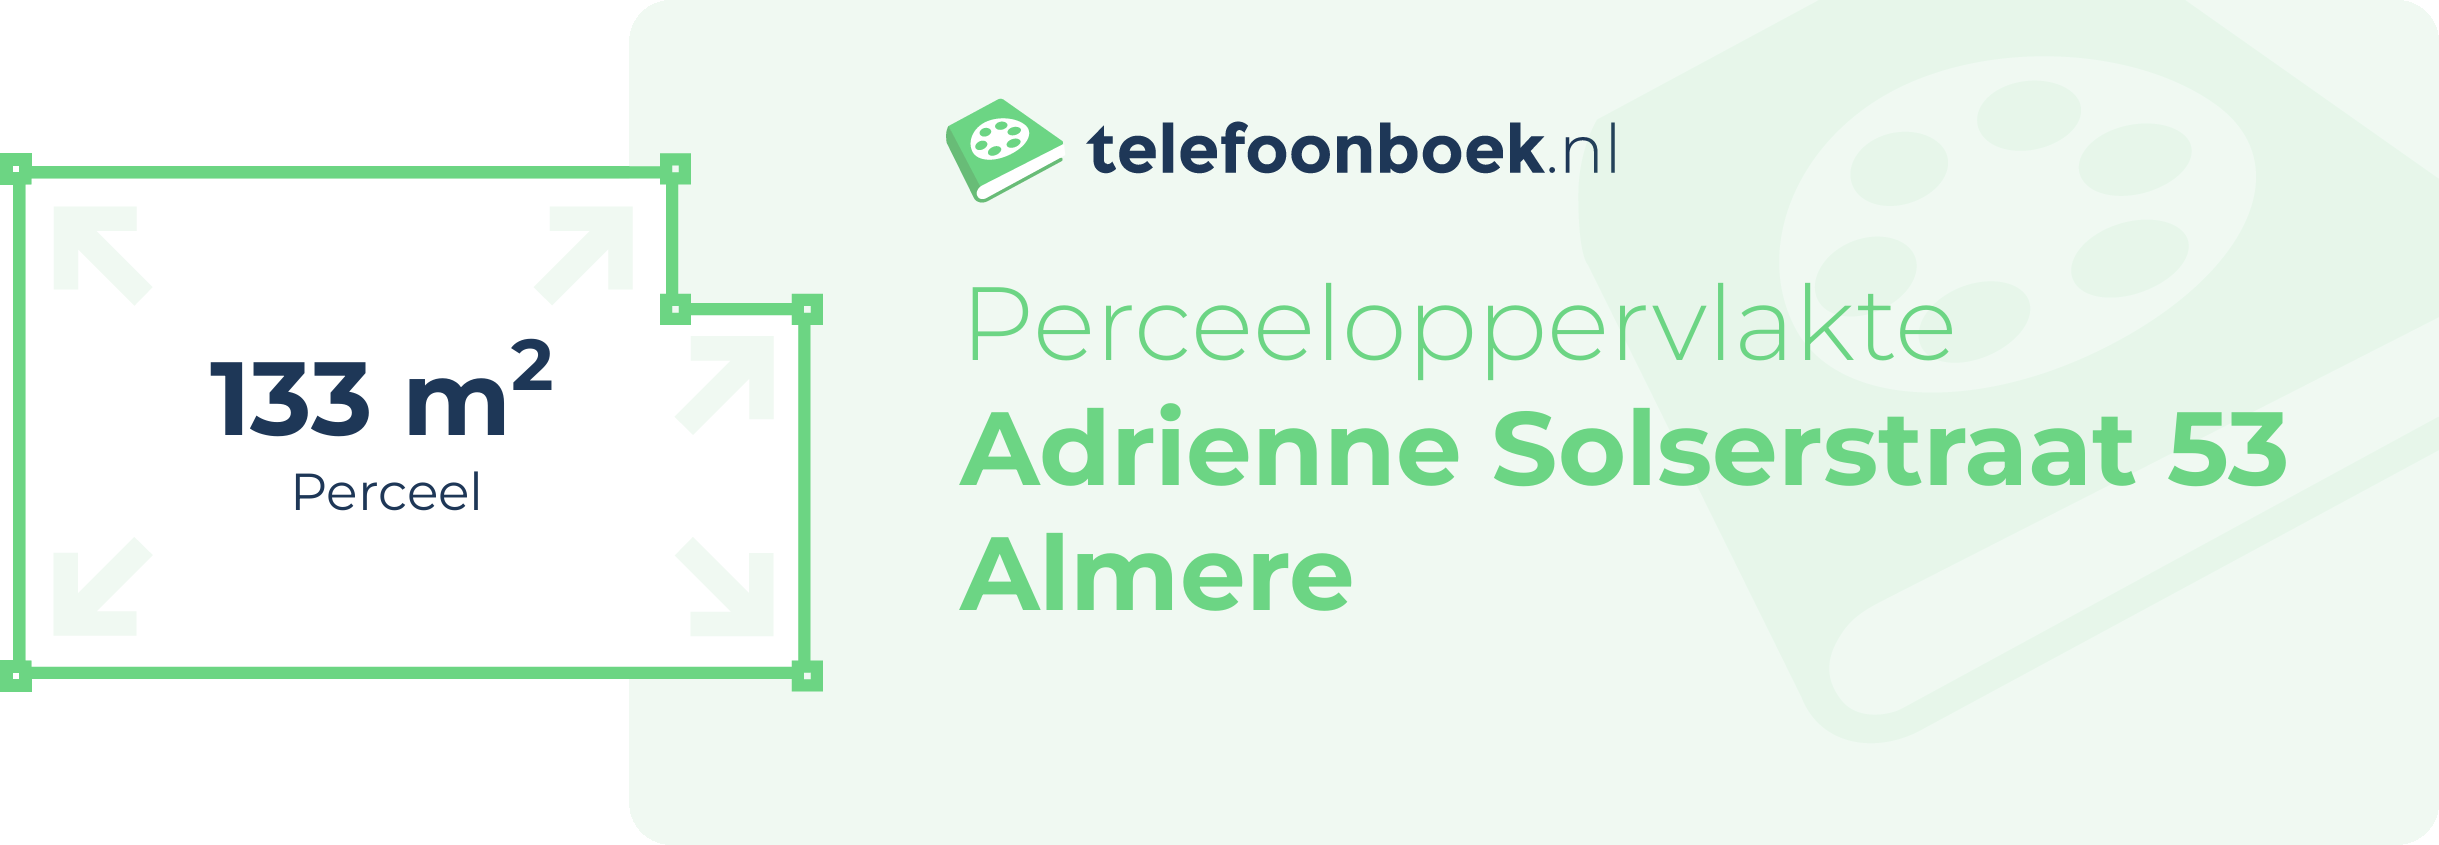 Perceeloppervlakte Adrienne Solserstraat 53 Almere